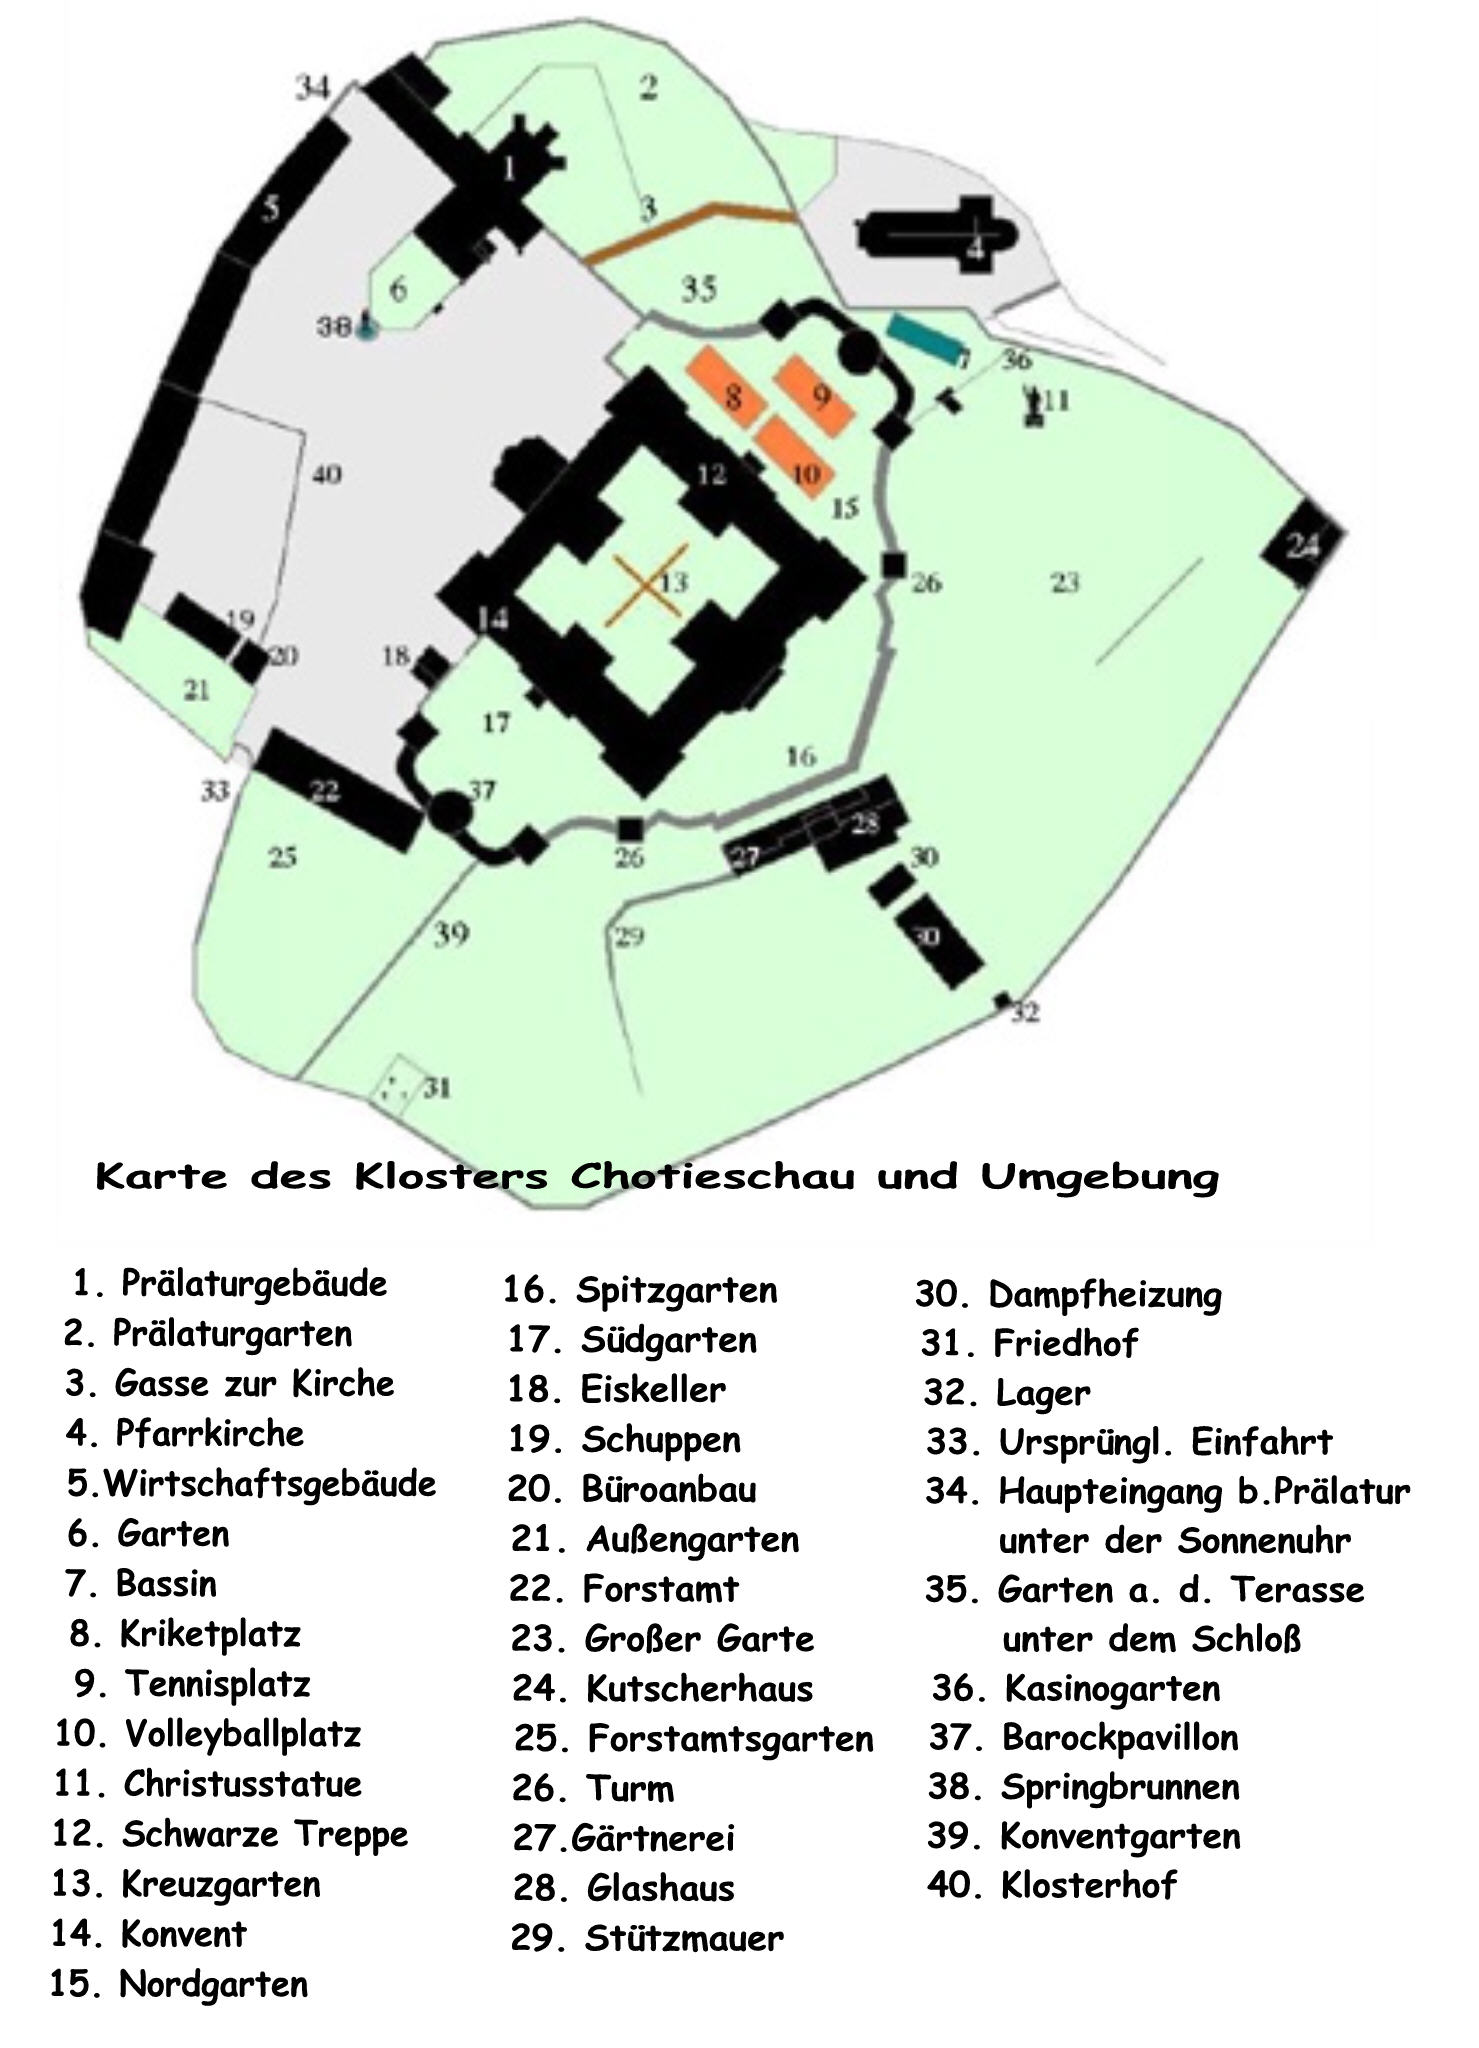 Karte d Klosters